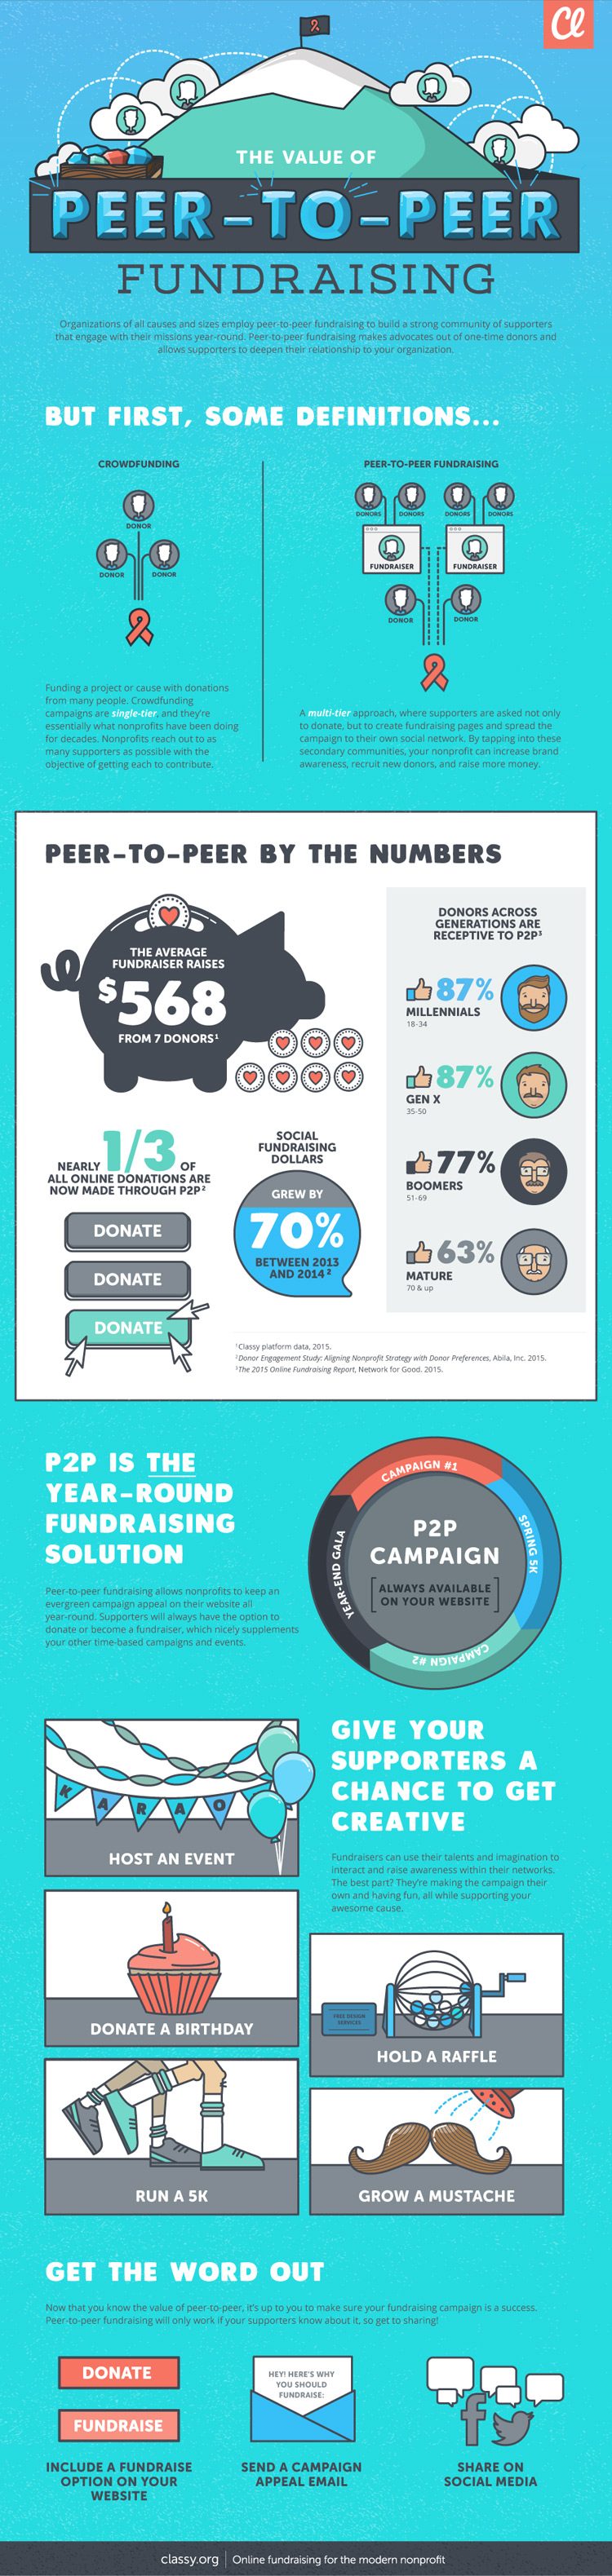 peer to peer fundraising infographic